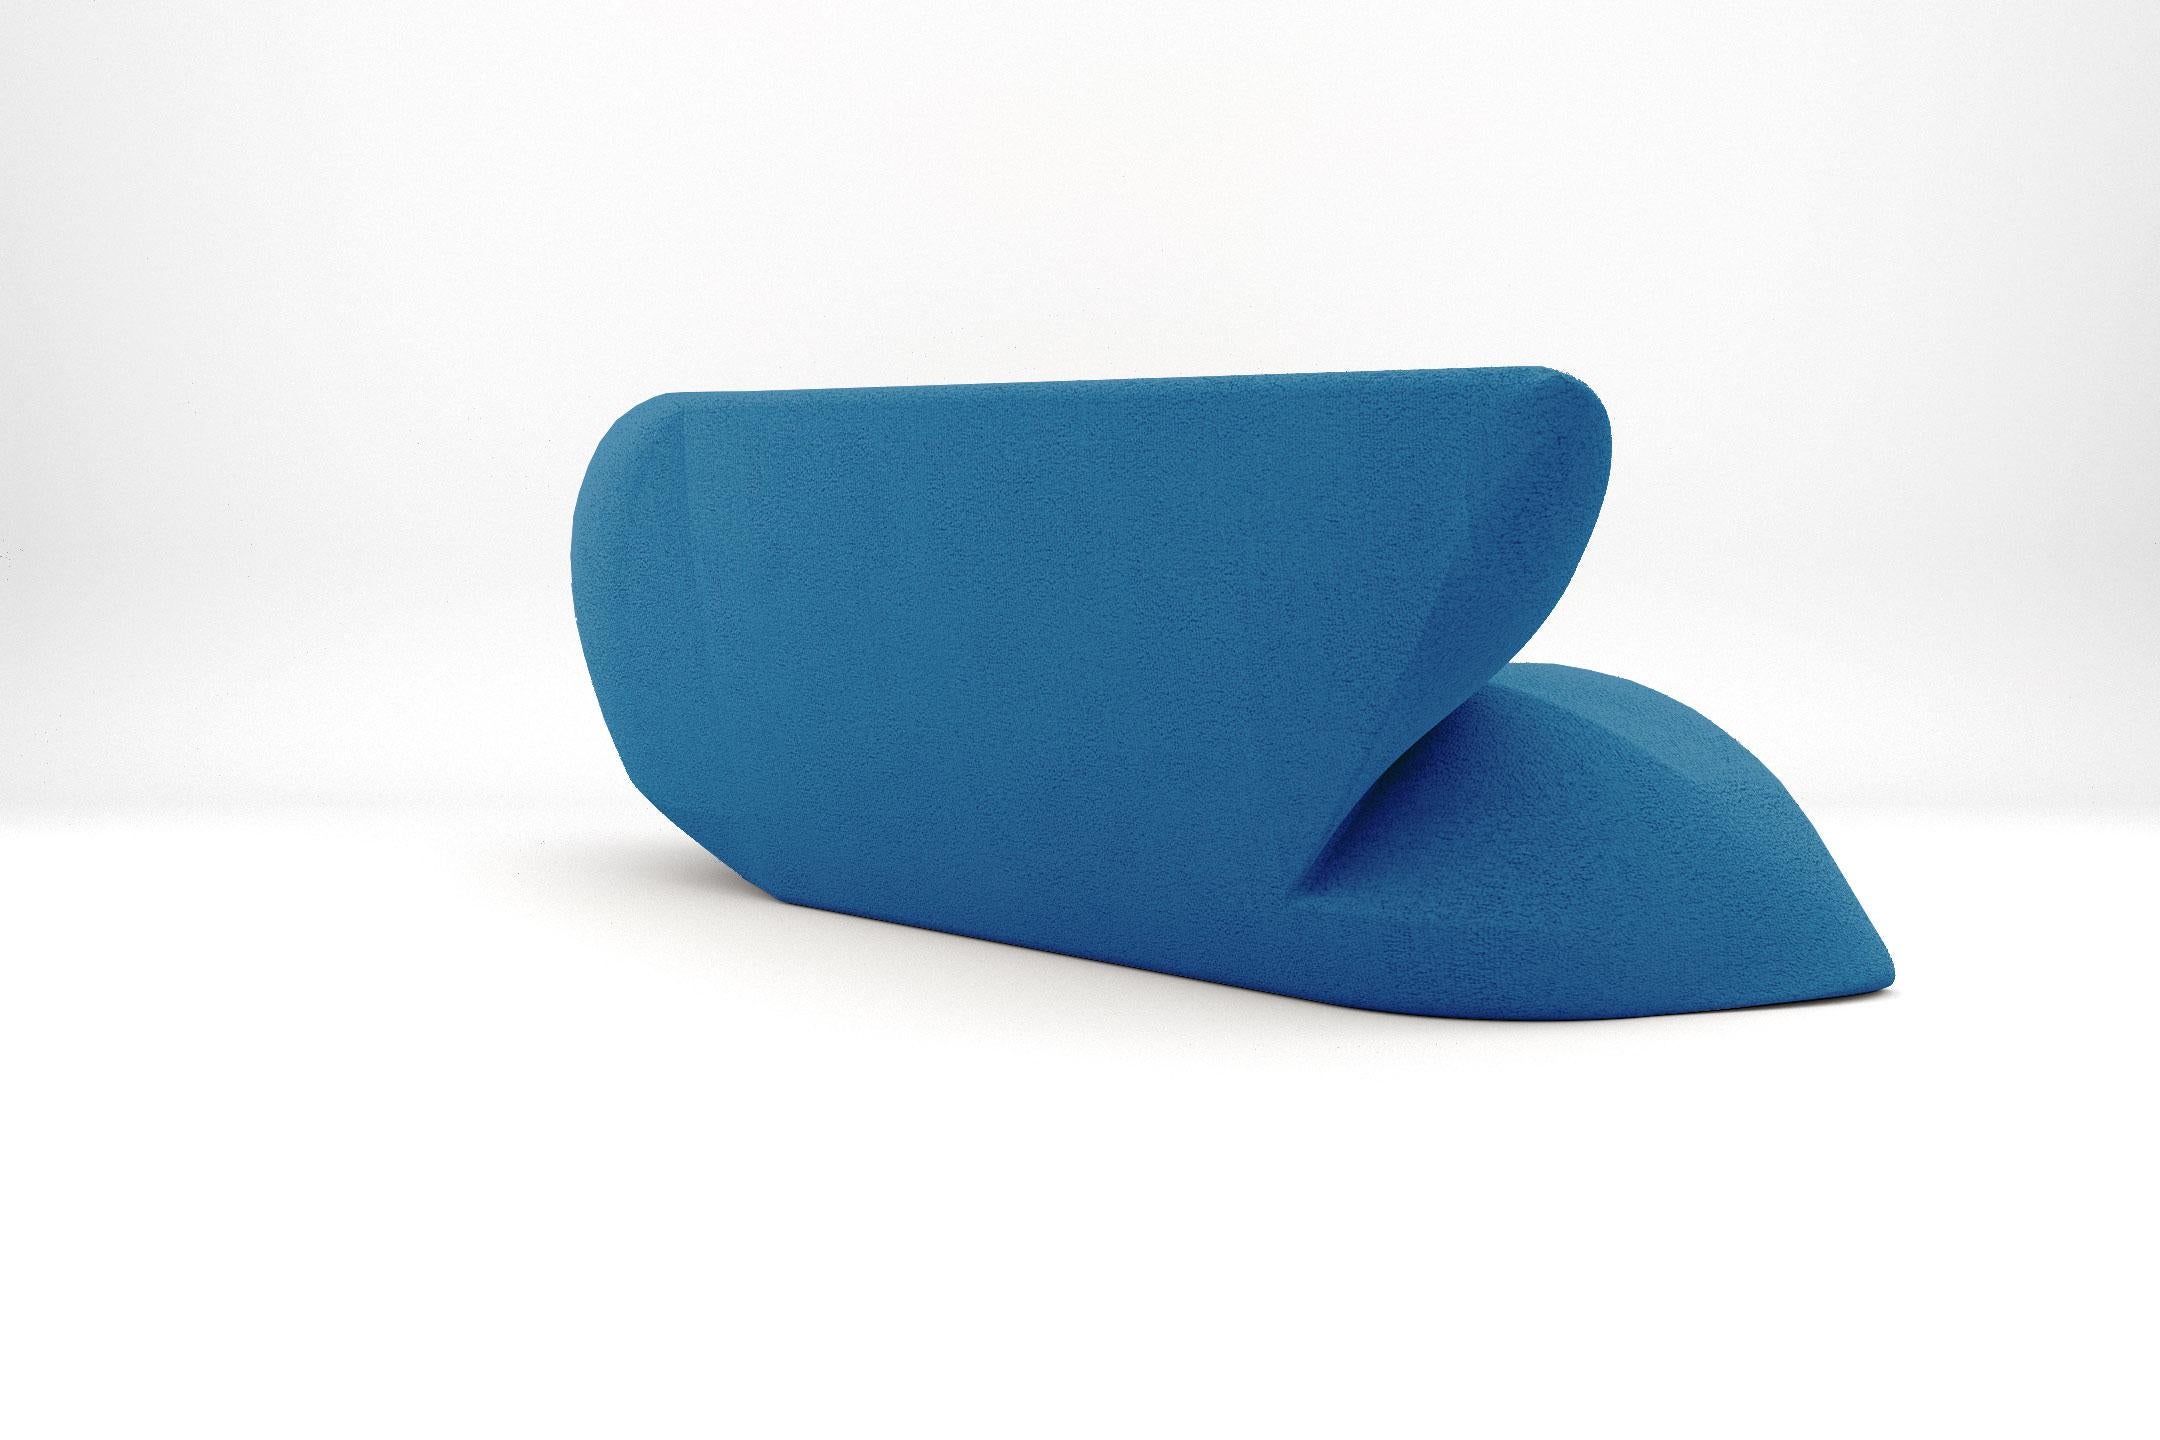 European Delta Sofa - Modern Classic Blue Upholstered Three Seat Sofa For Sale